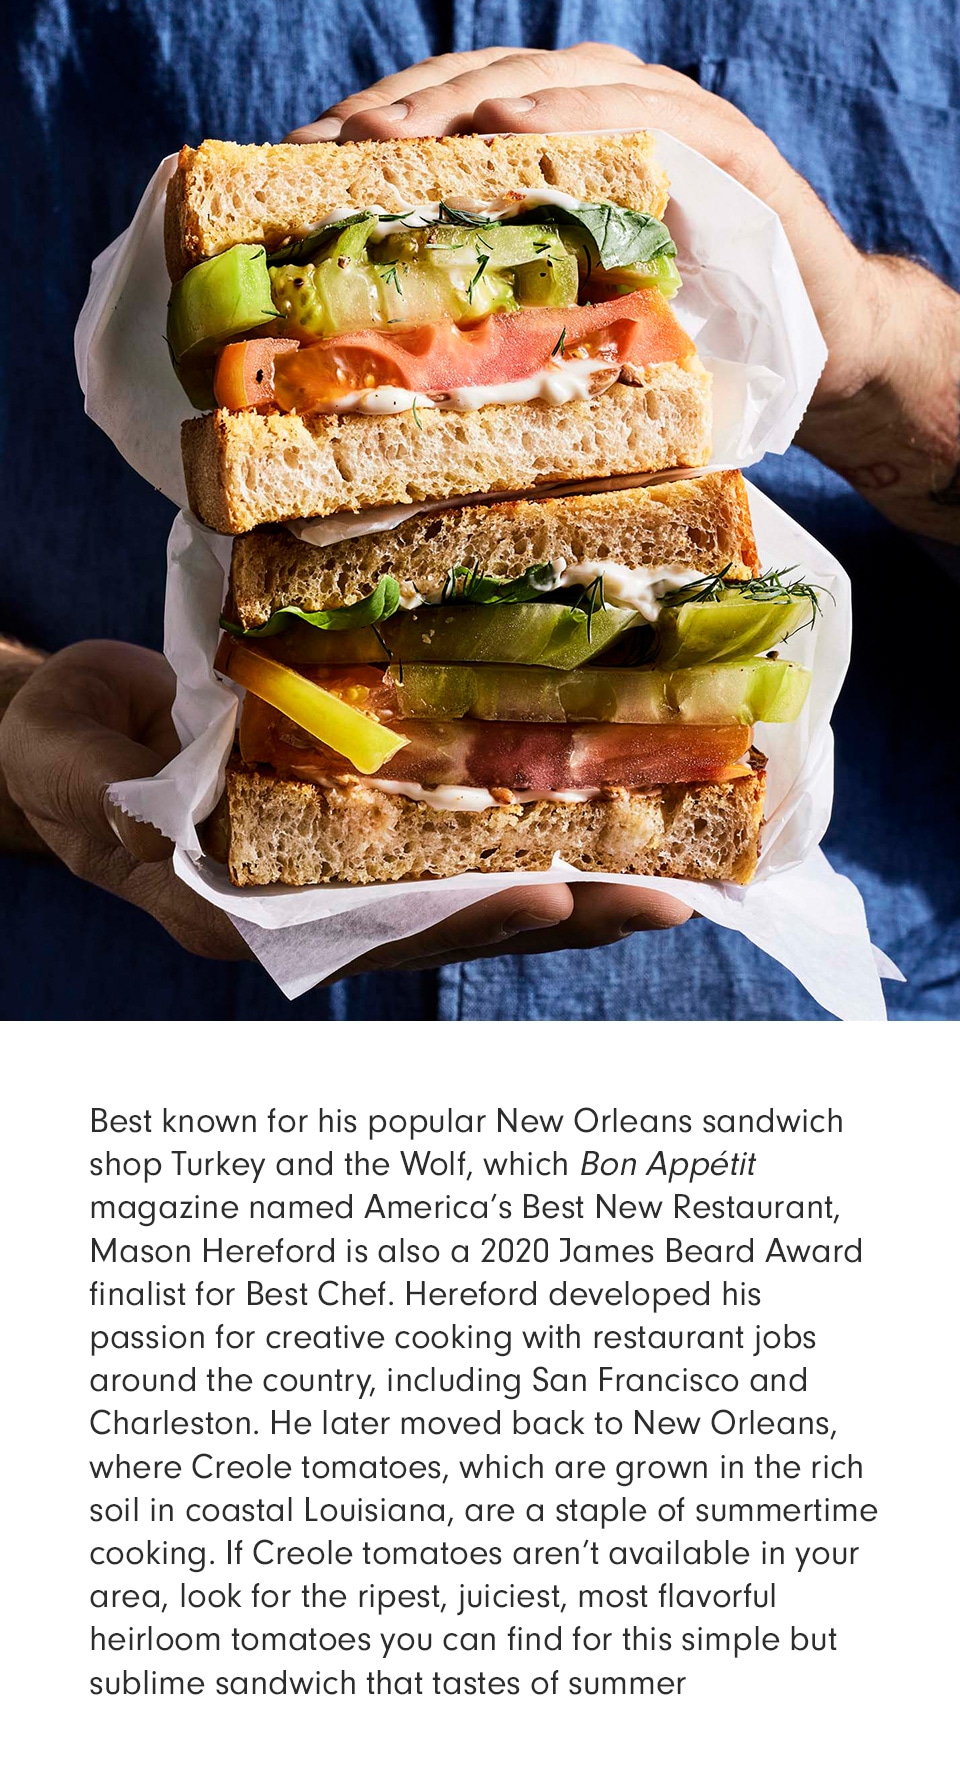 Mason Hereford's Heirloom Tomato Sandwiches